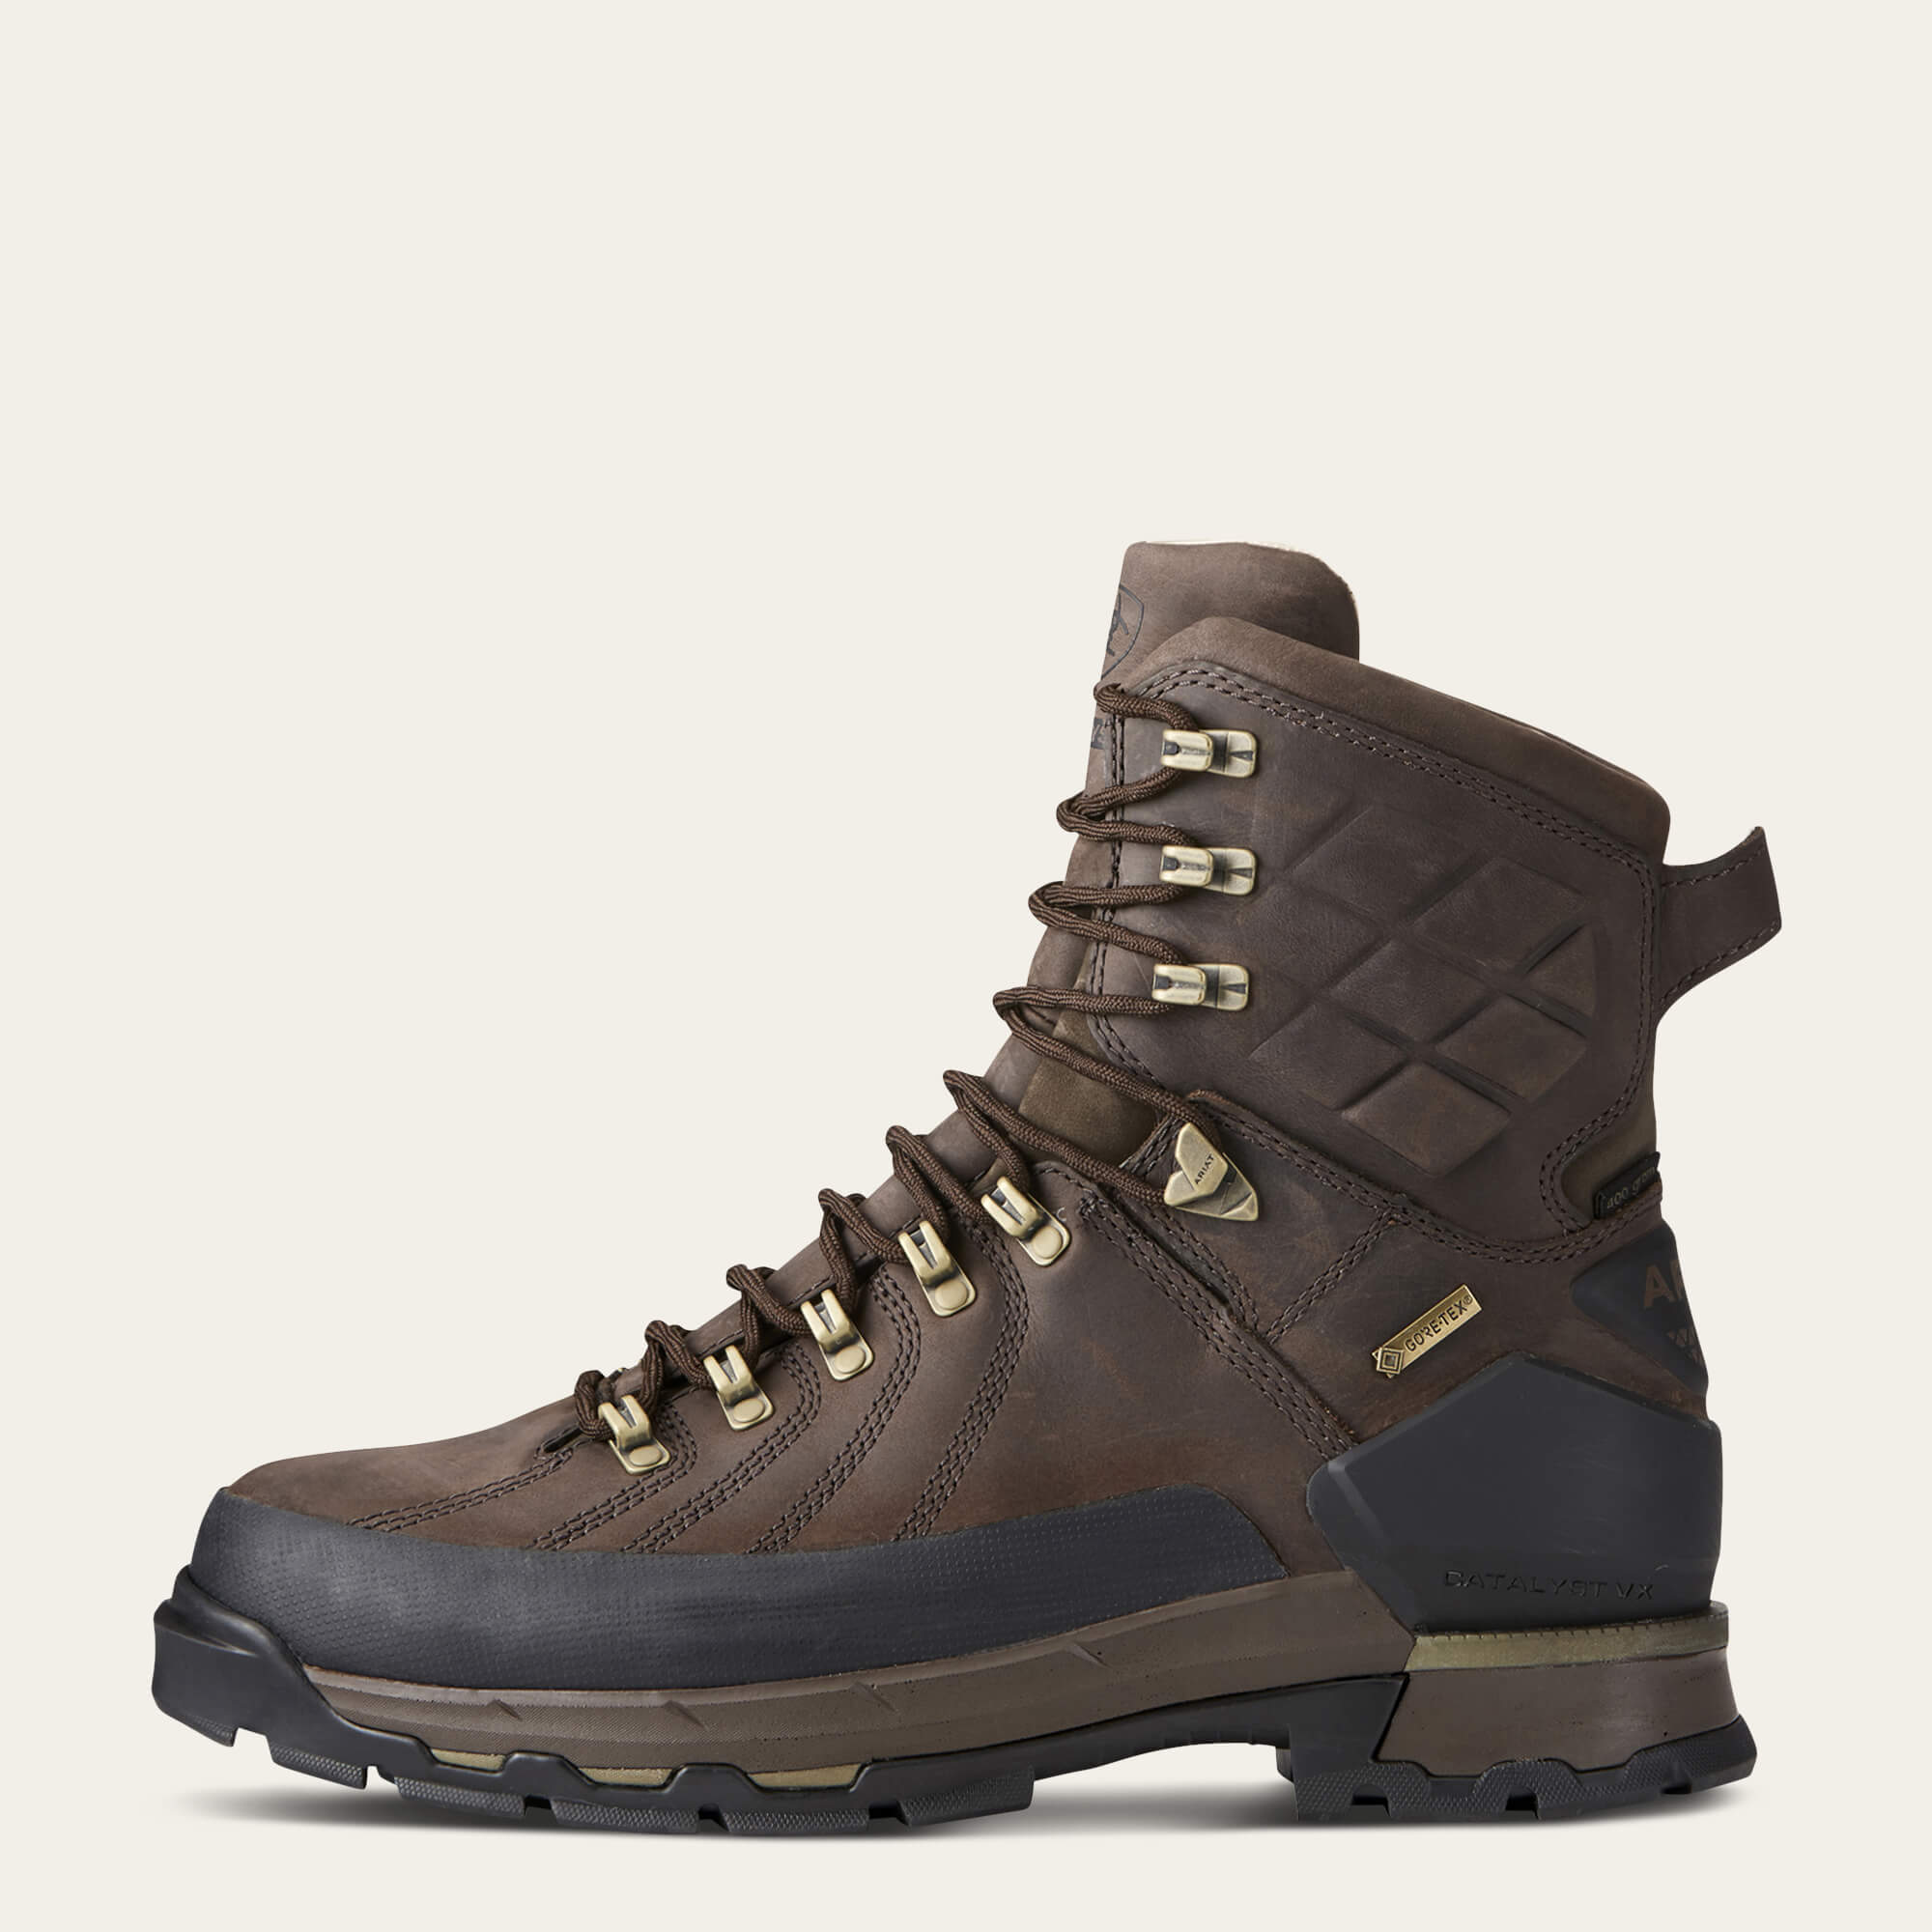 Ariat men's boots